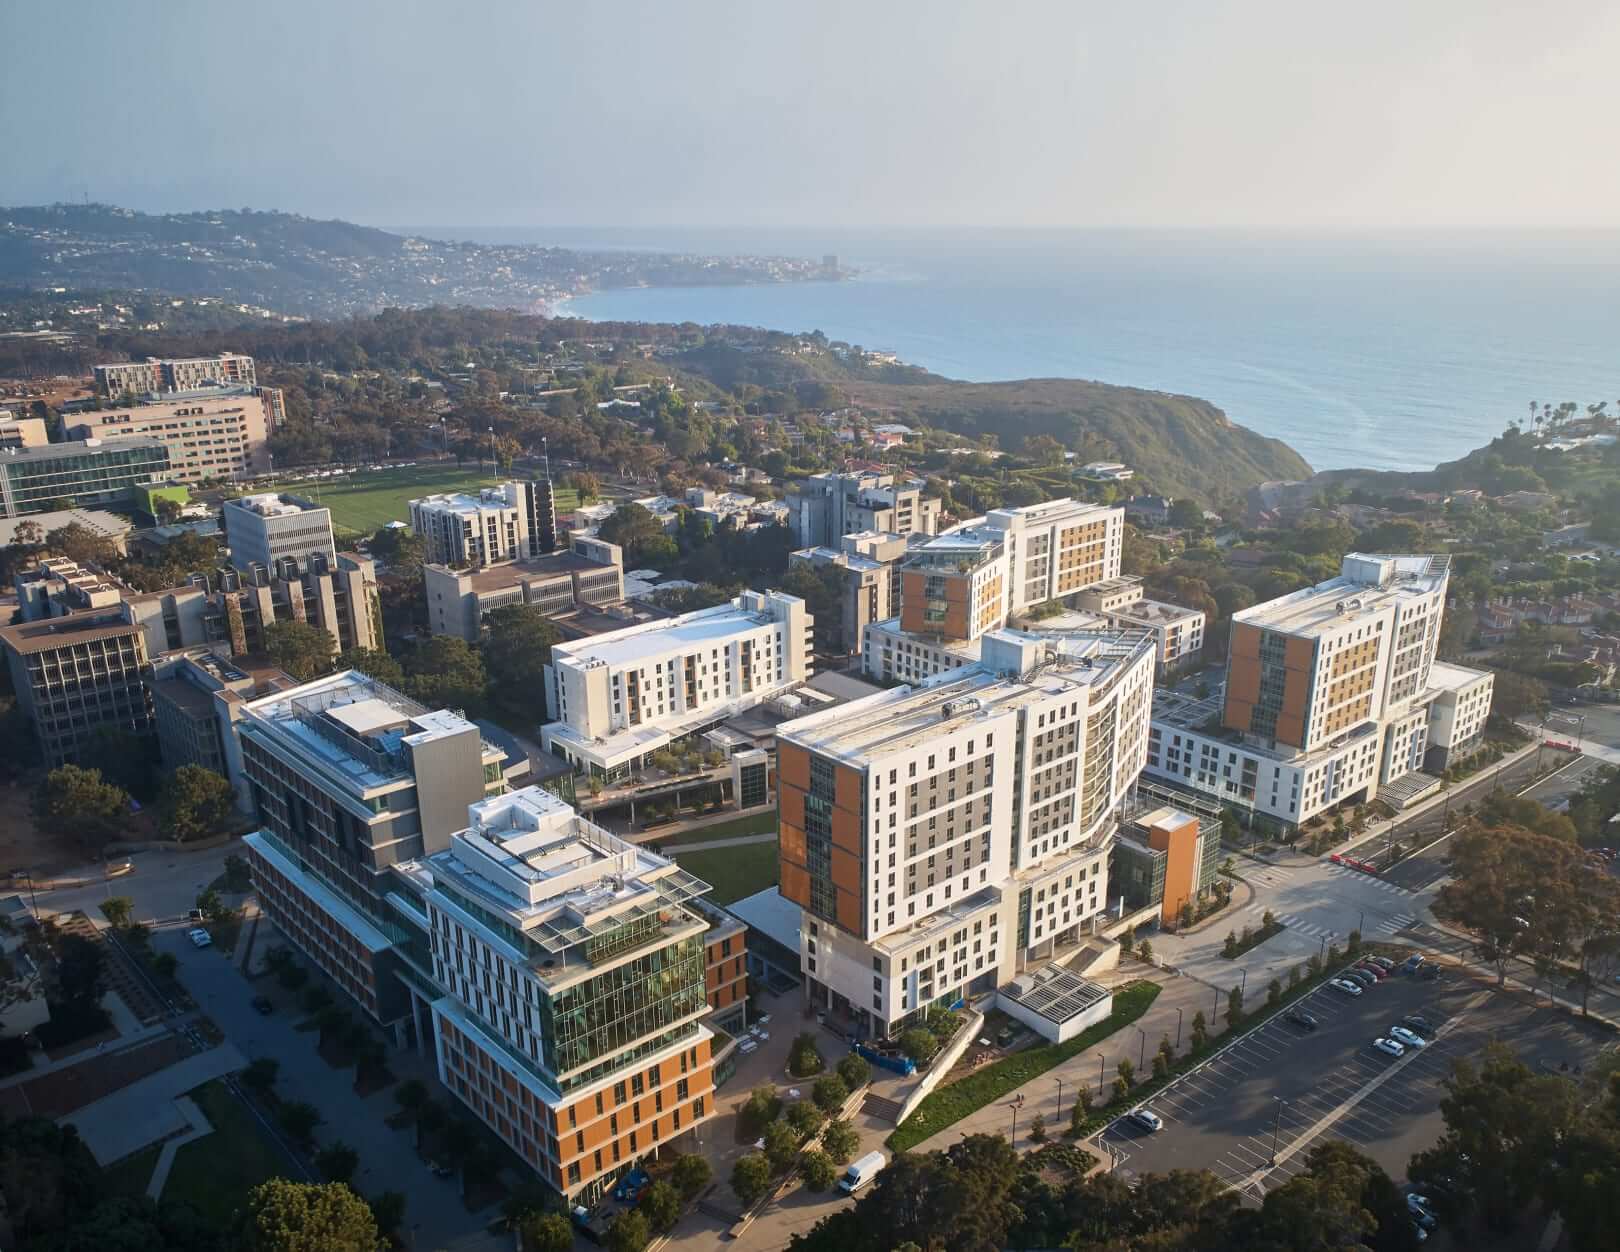 aerial view of an academic complex near the ocean